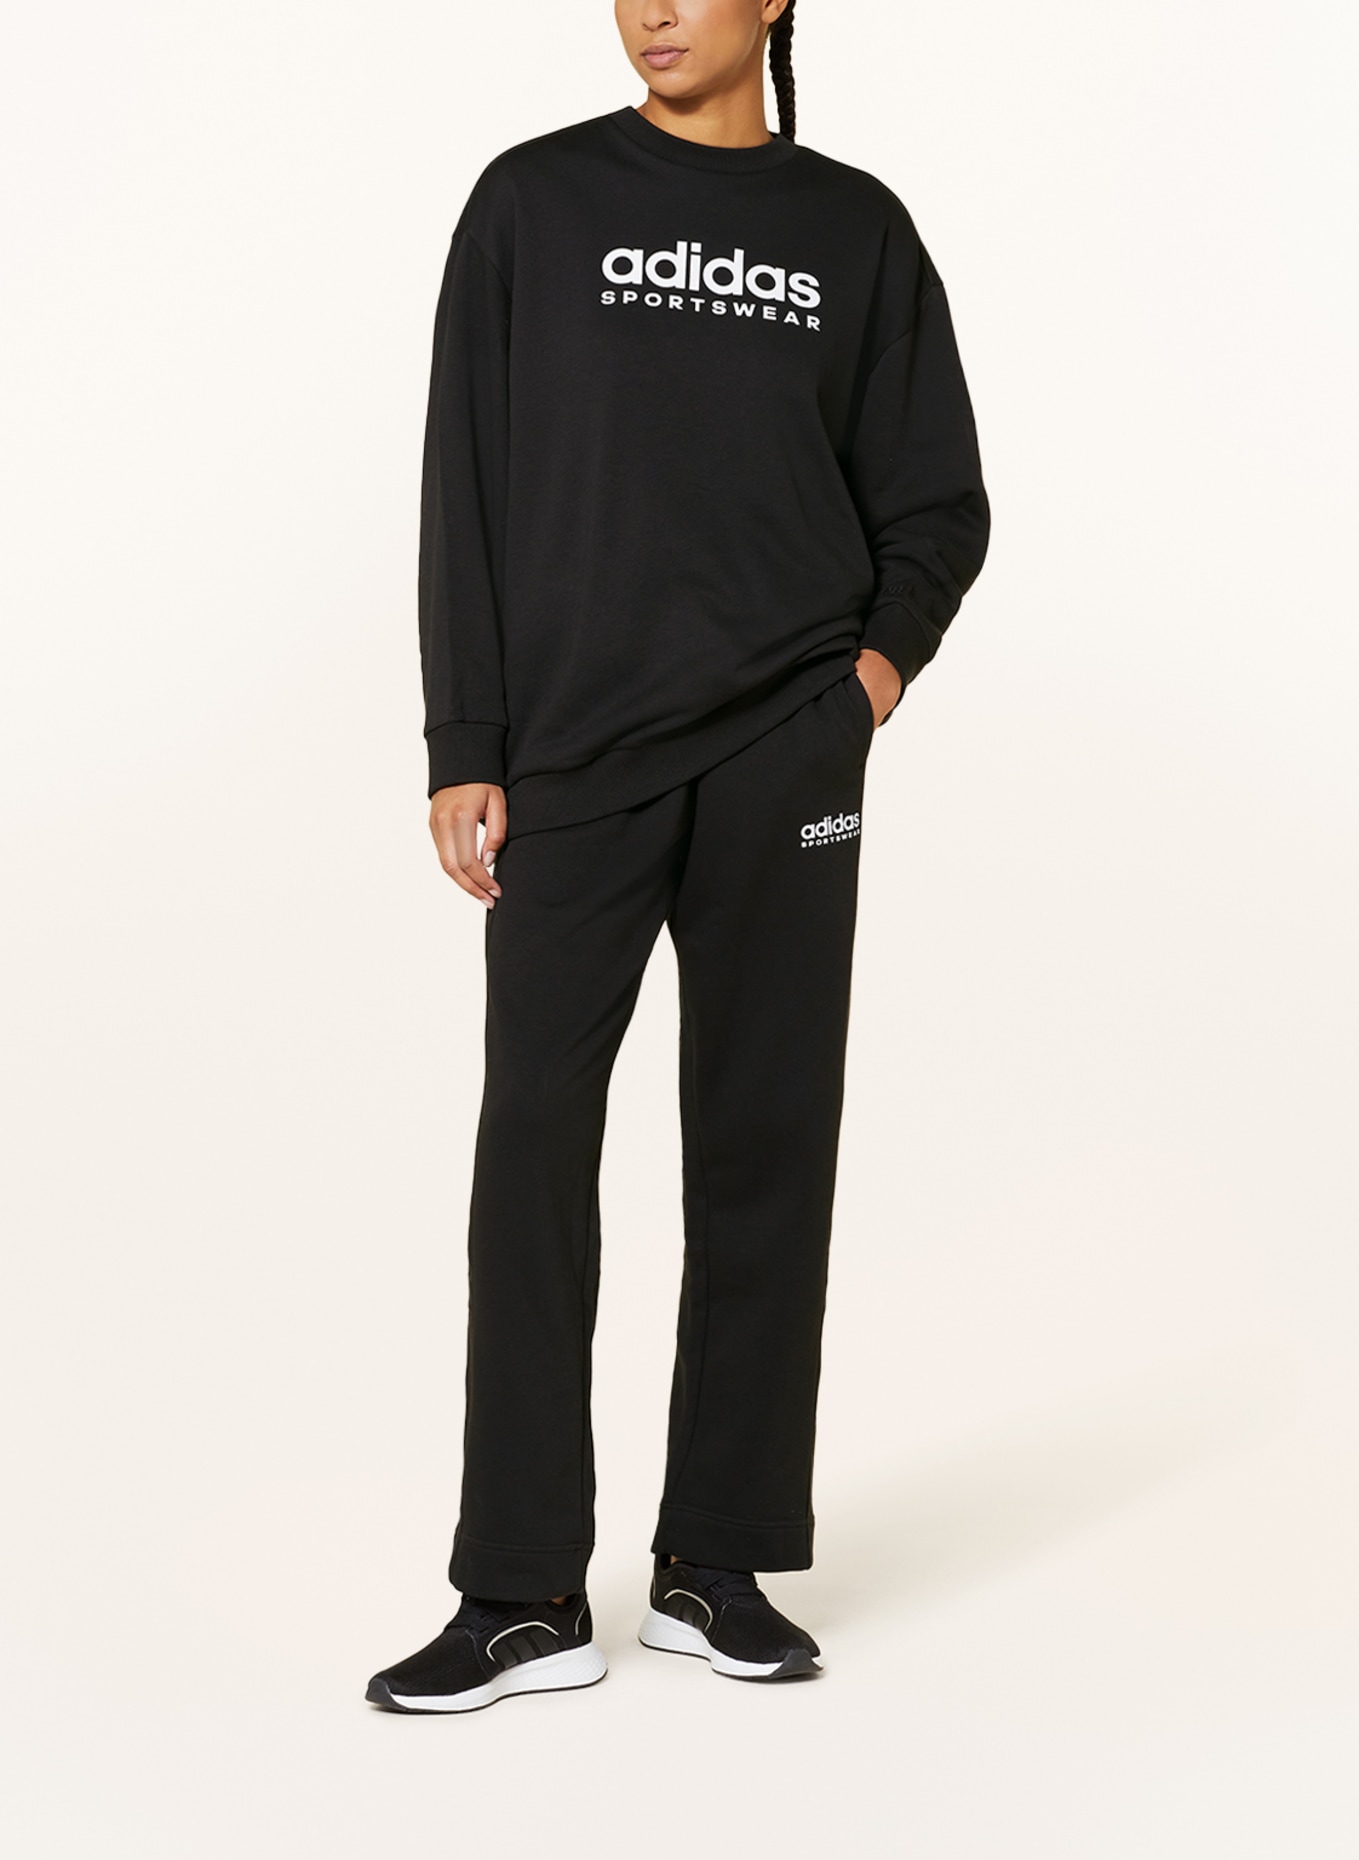 adidas Sportswear Damen Jogginghose ALL SZN kaufen